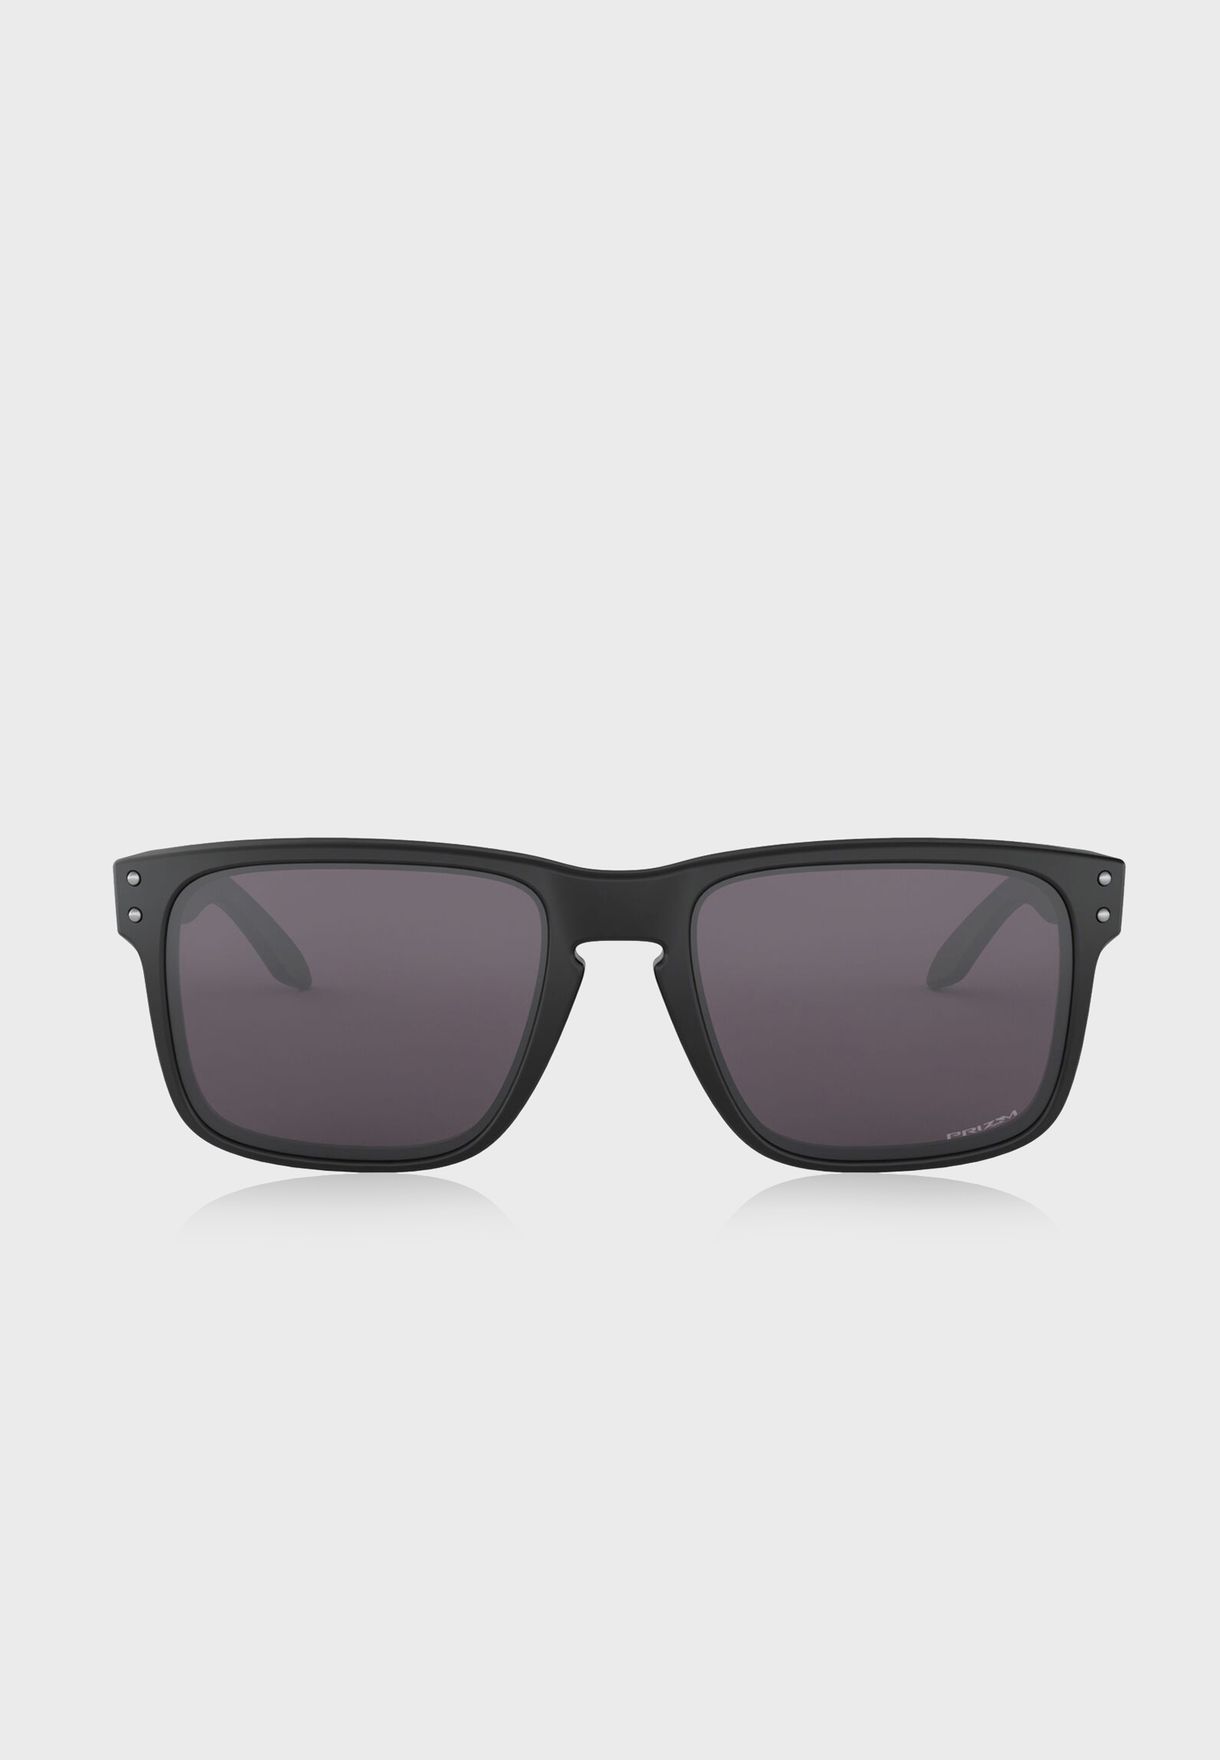 holbrook sunglasses cheap